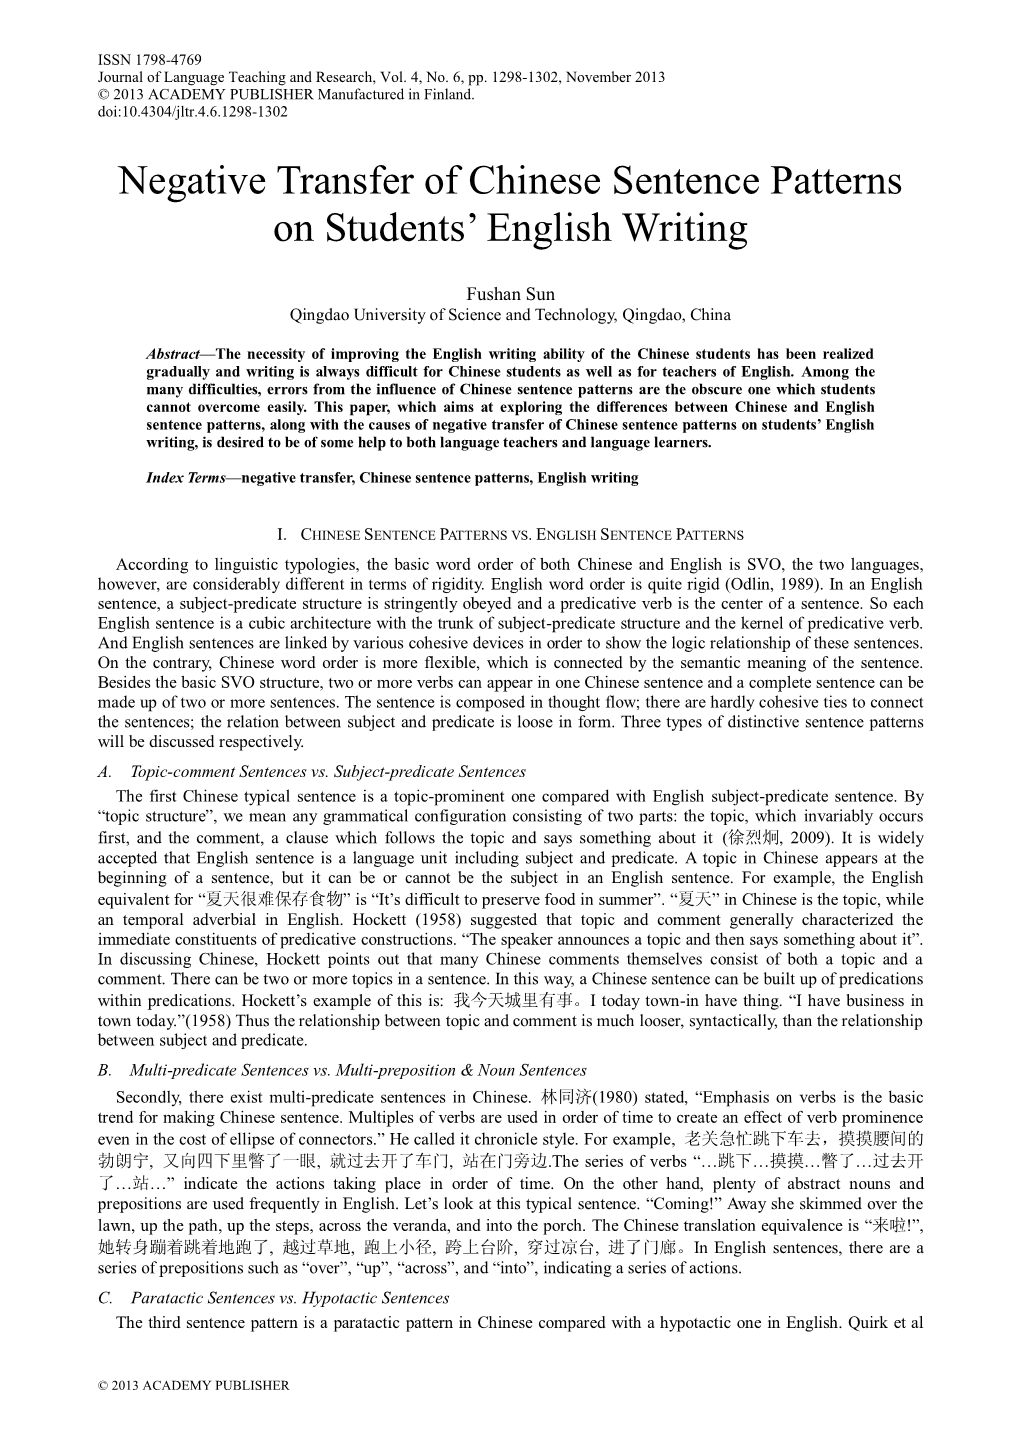 Negative Transfer of Chinese Sentence Patterns on Students’ English Writing